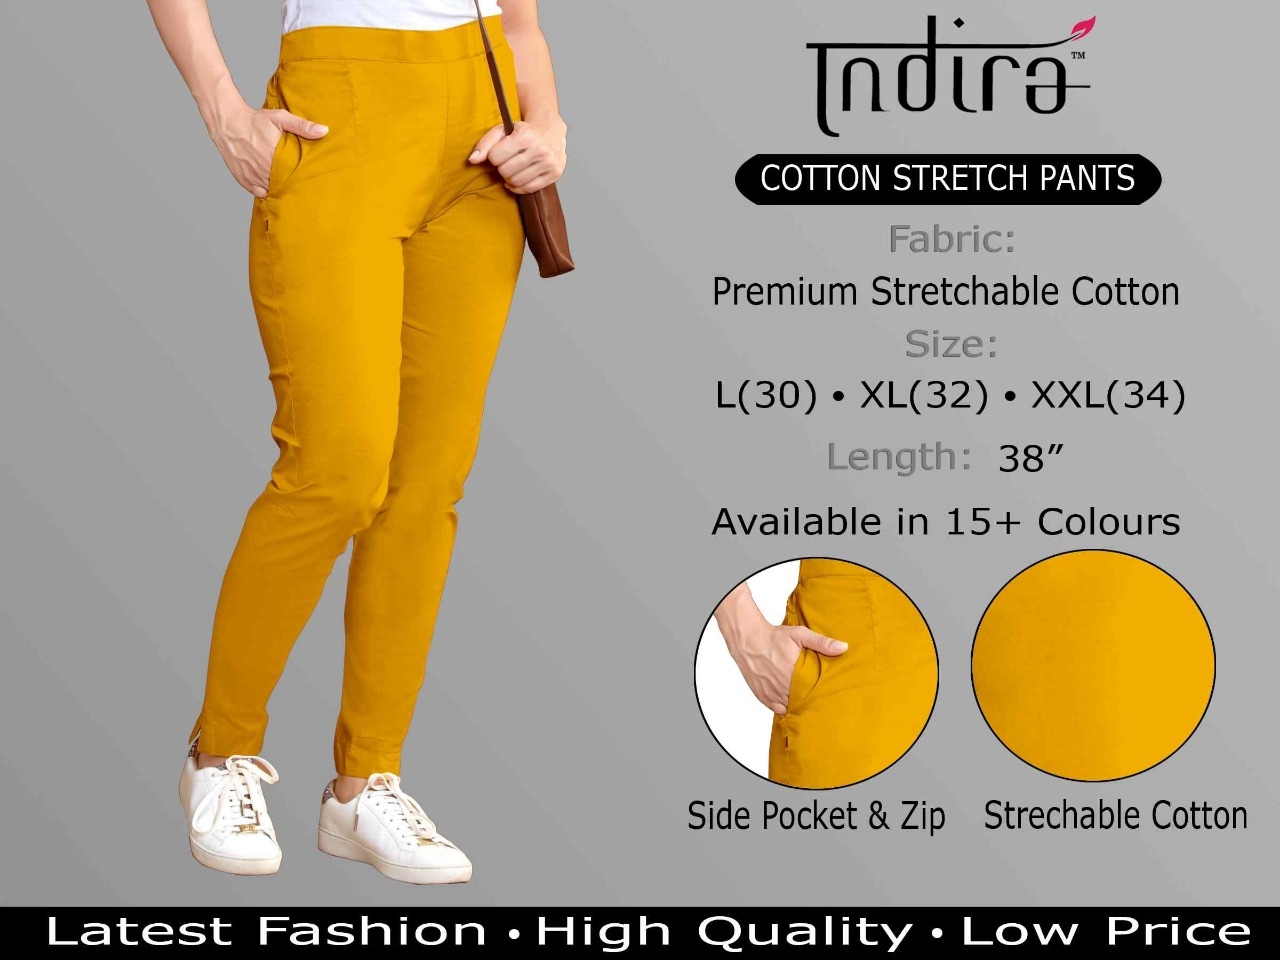 Indira Cotton Stretch Pants ladies Collection Wholesale Price